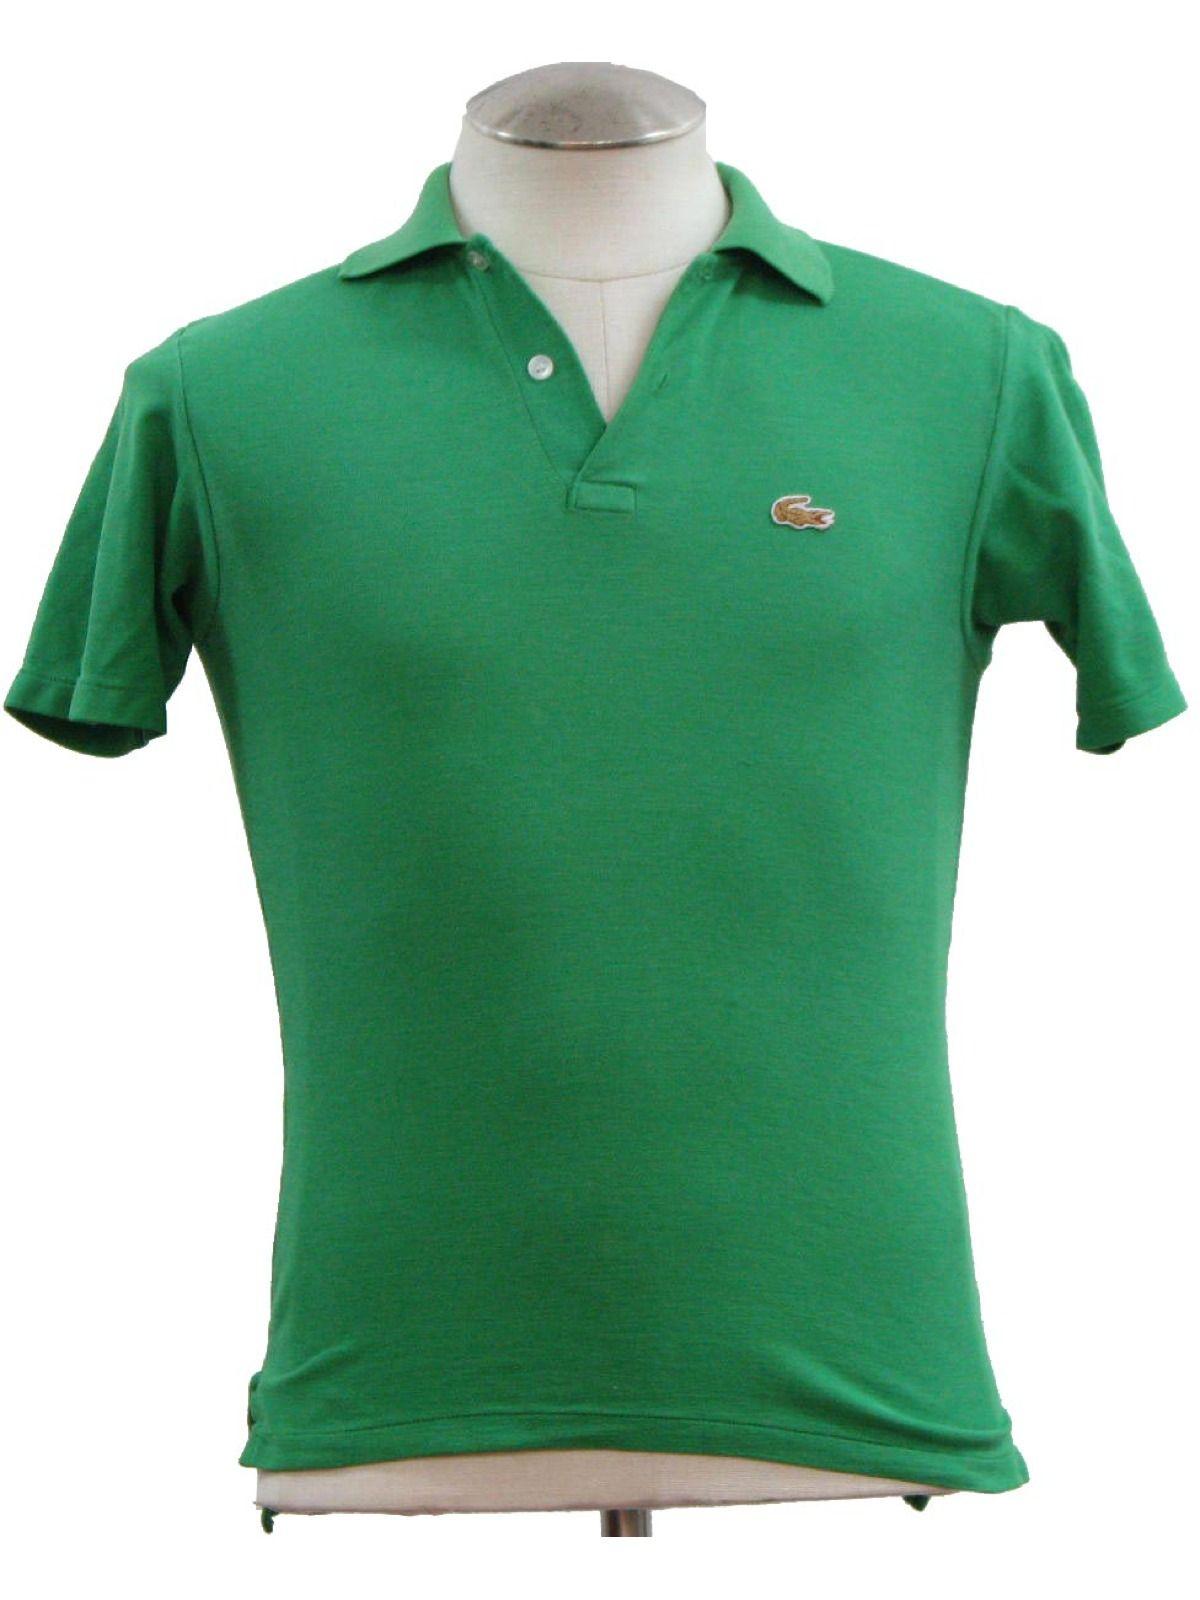 Izod Clothing Logo - Eighties Izod Shirt: 80s -Izod- Mens or boys green woven cotton and ...